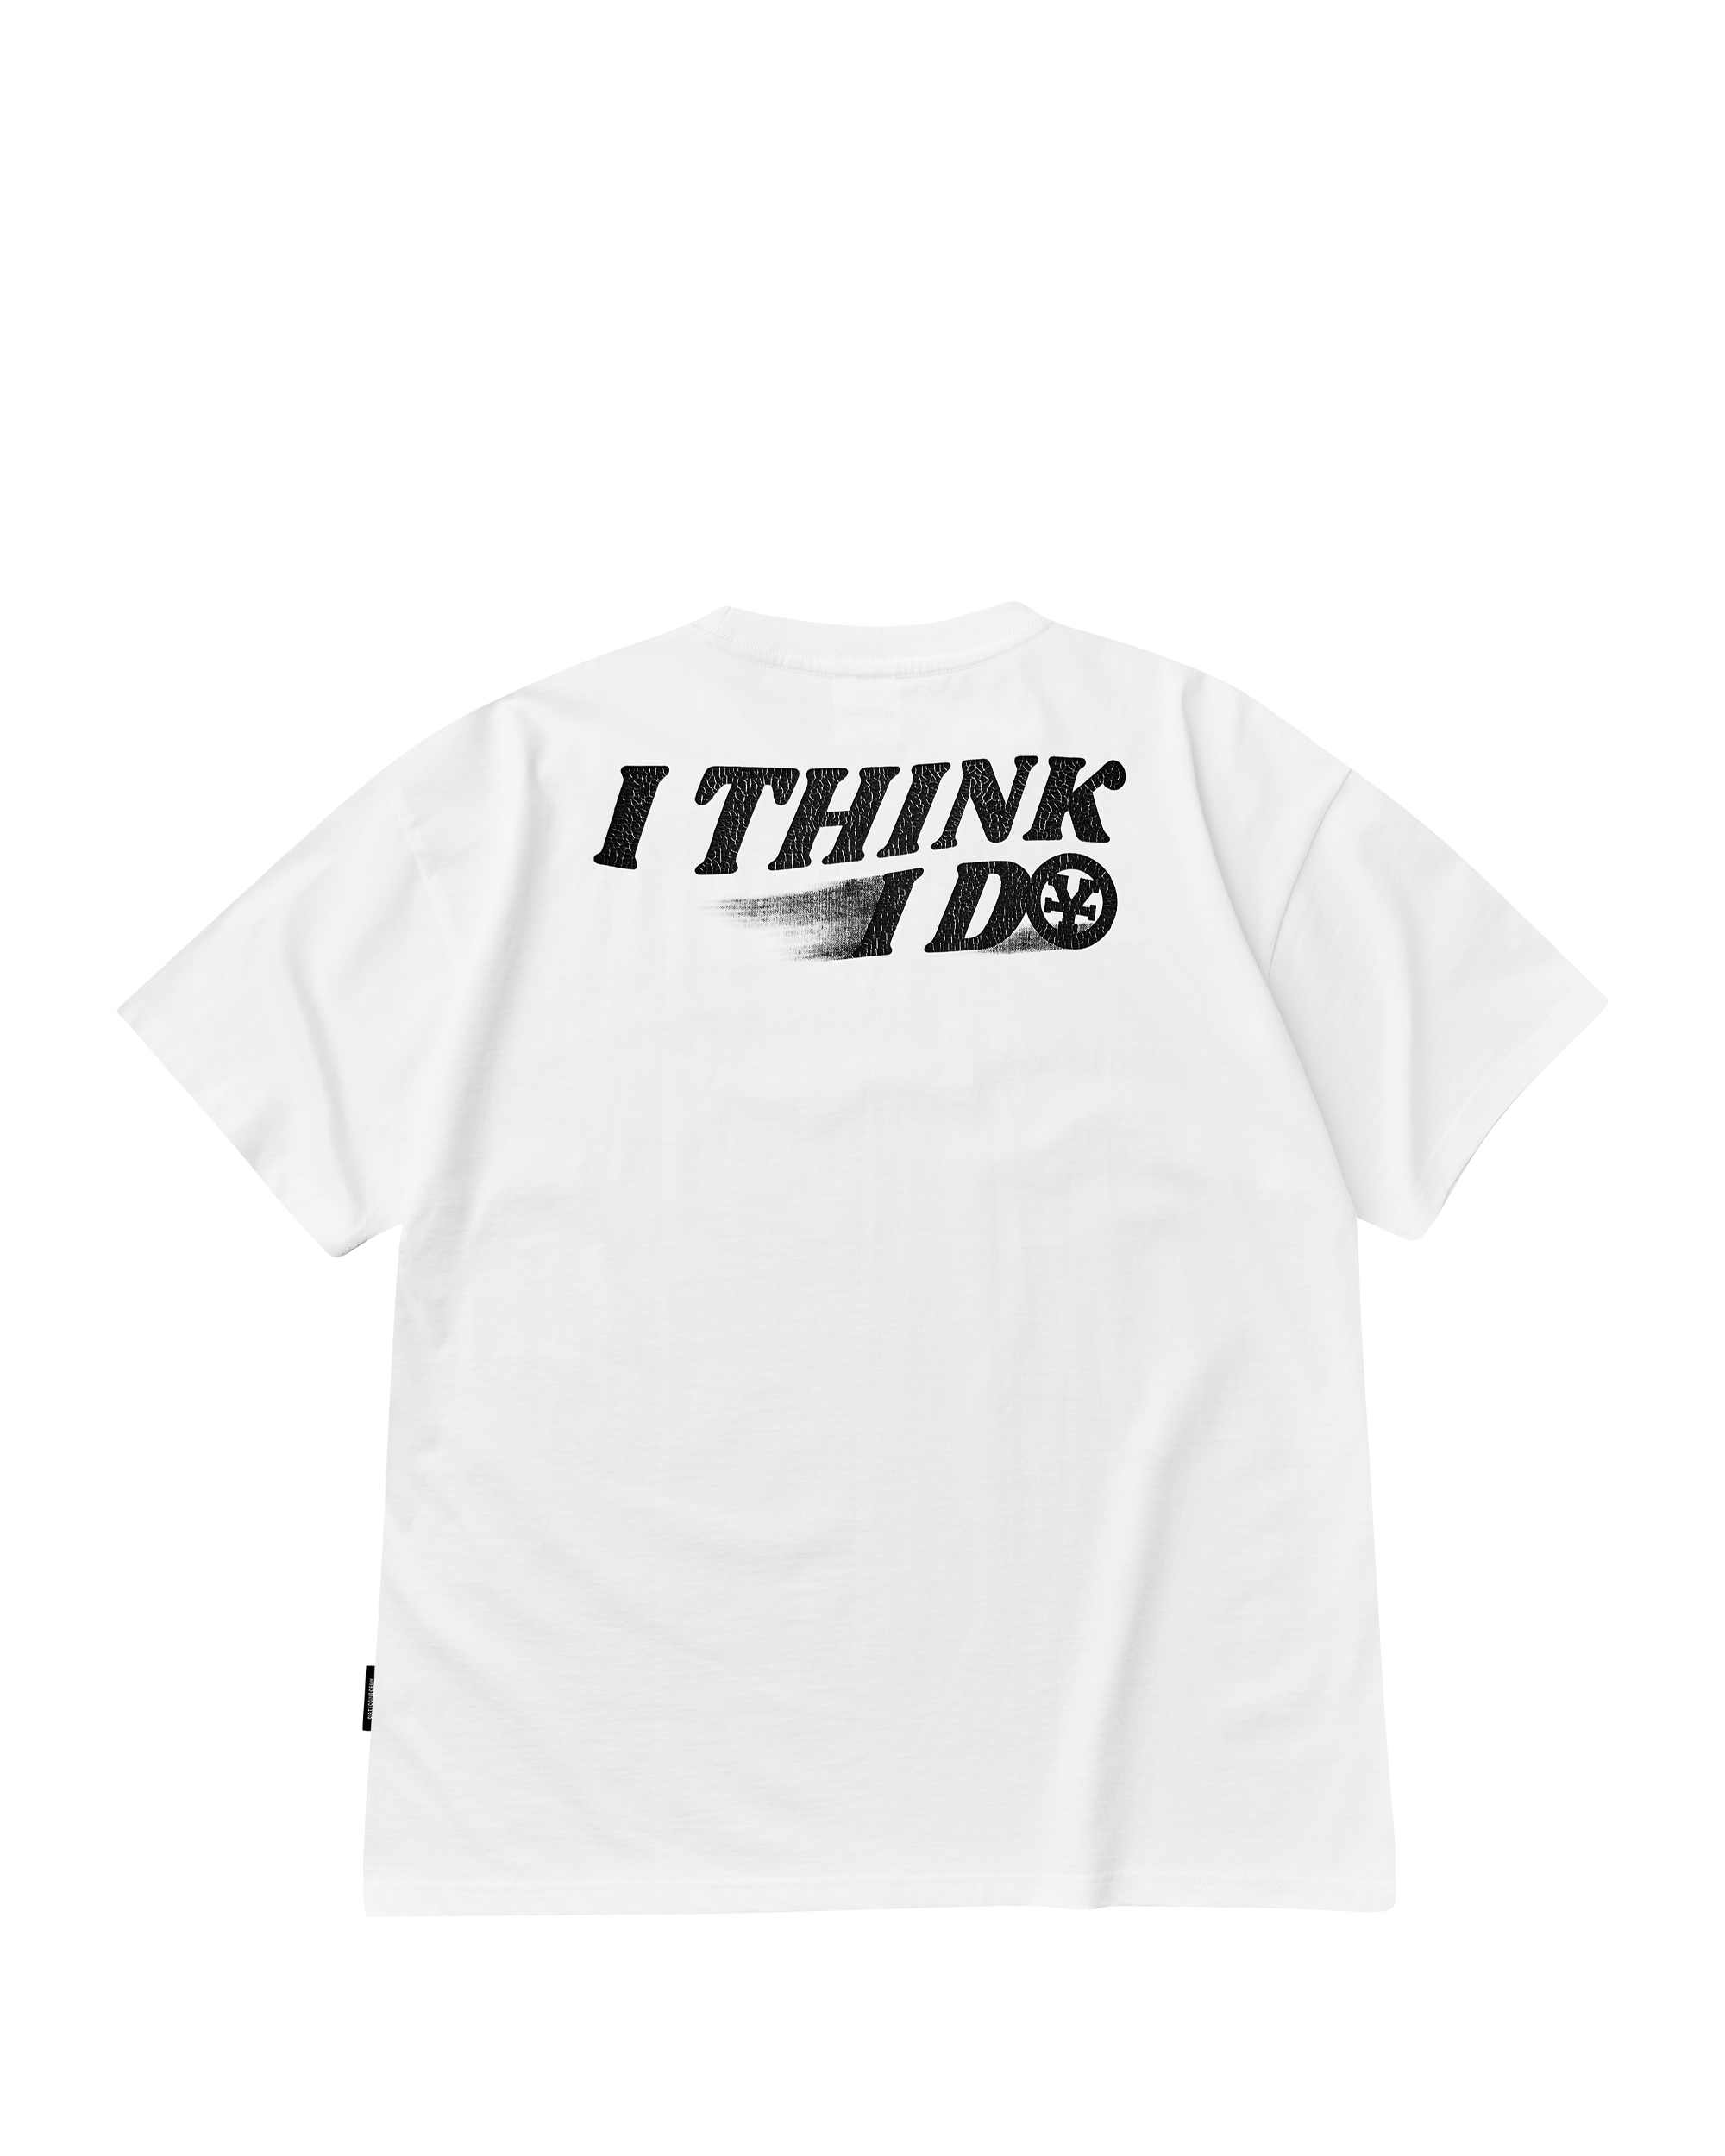 I Think I Do T-Shirt - White - Dirtycoins | Vietnamese Streetwear Brand